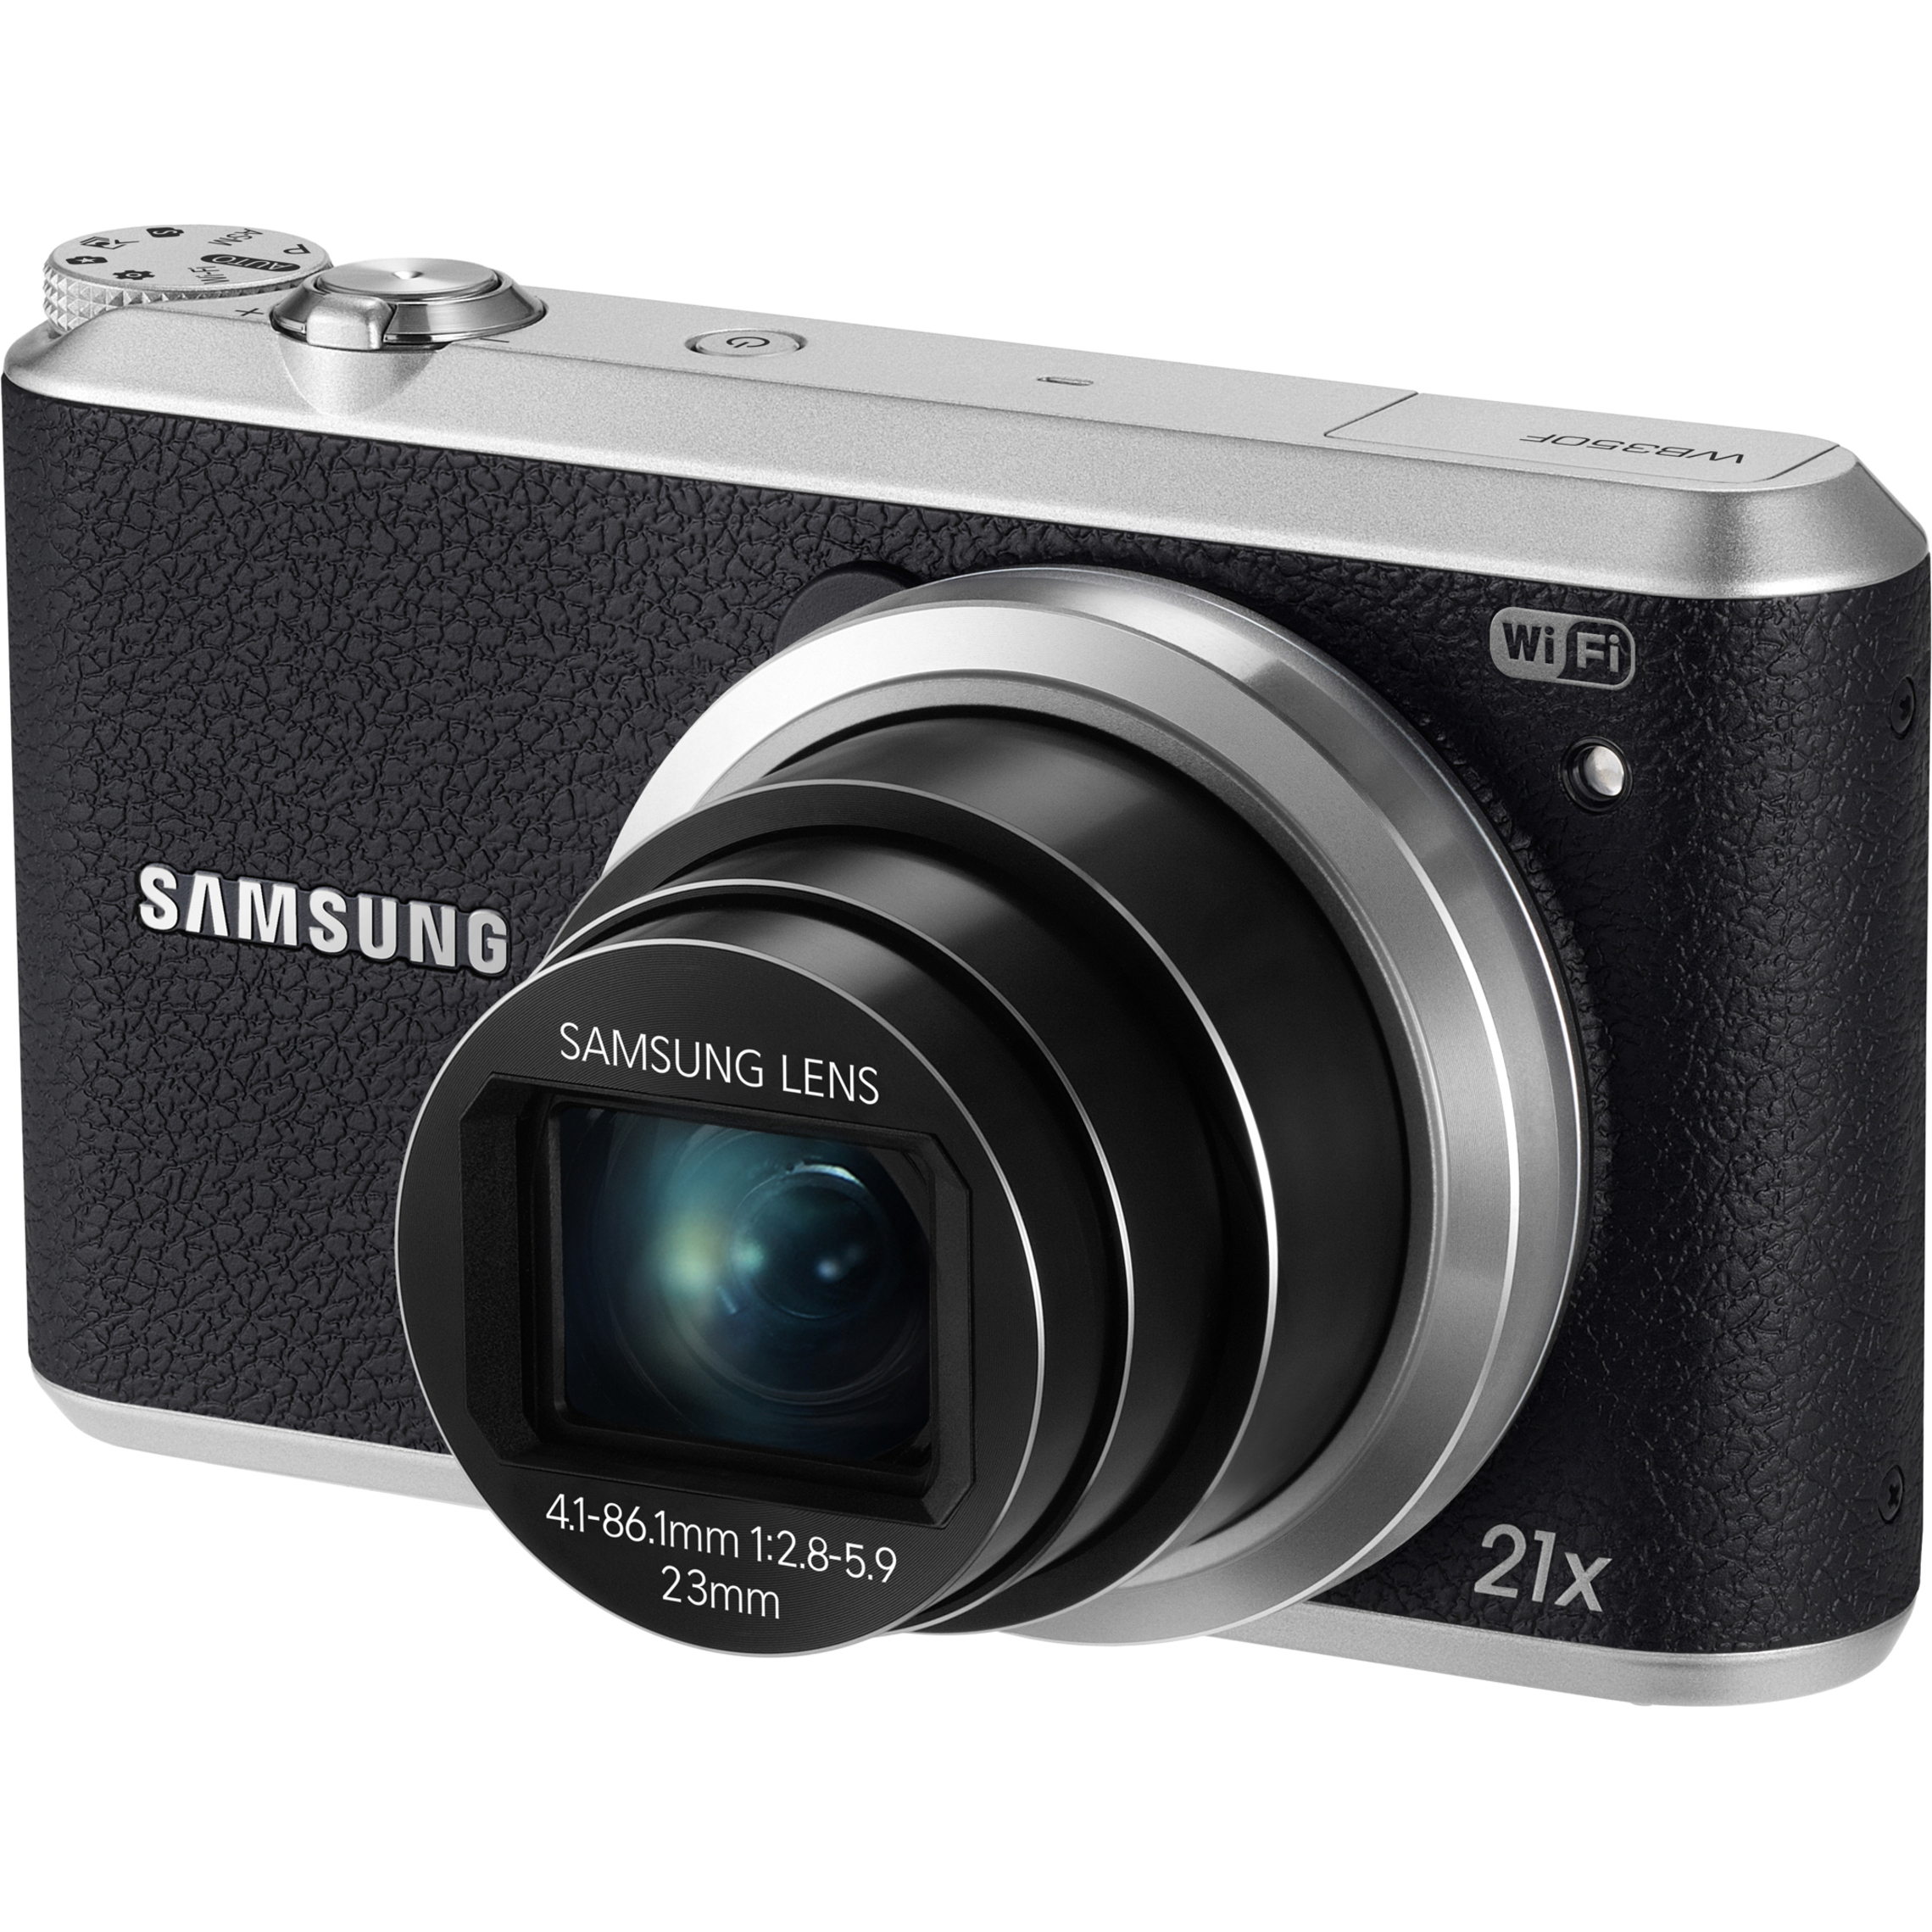 Samsung WB350F 16.3 Megapixel Compact Camera, Black - image 4 of 5